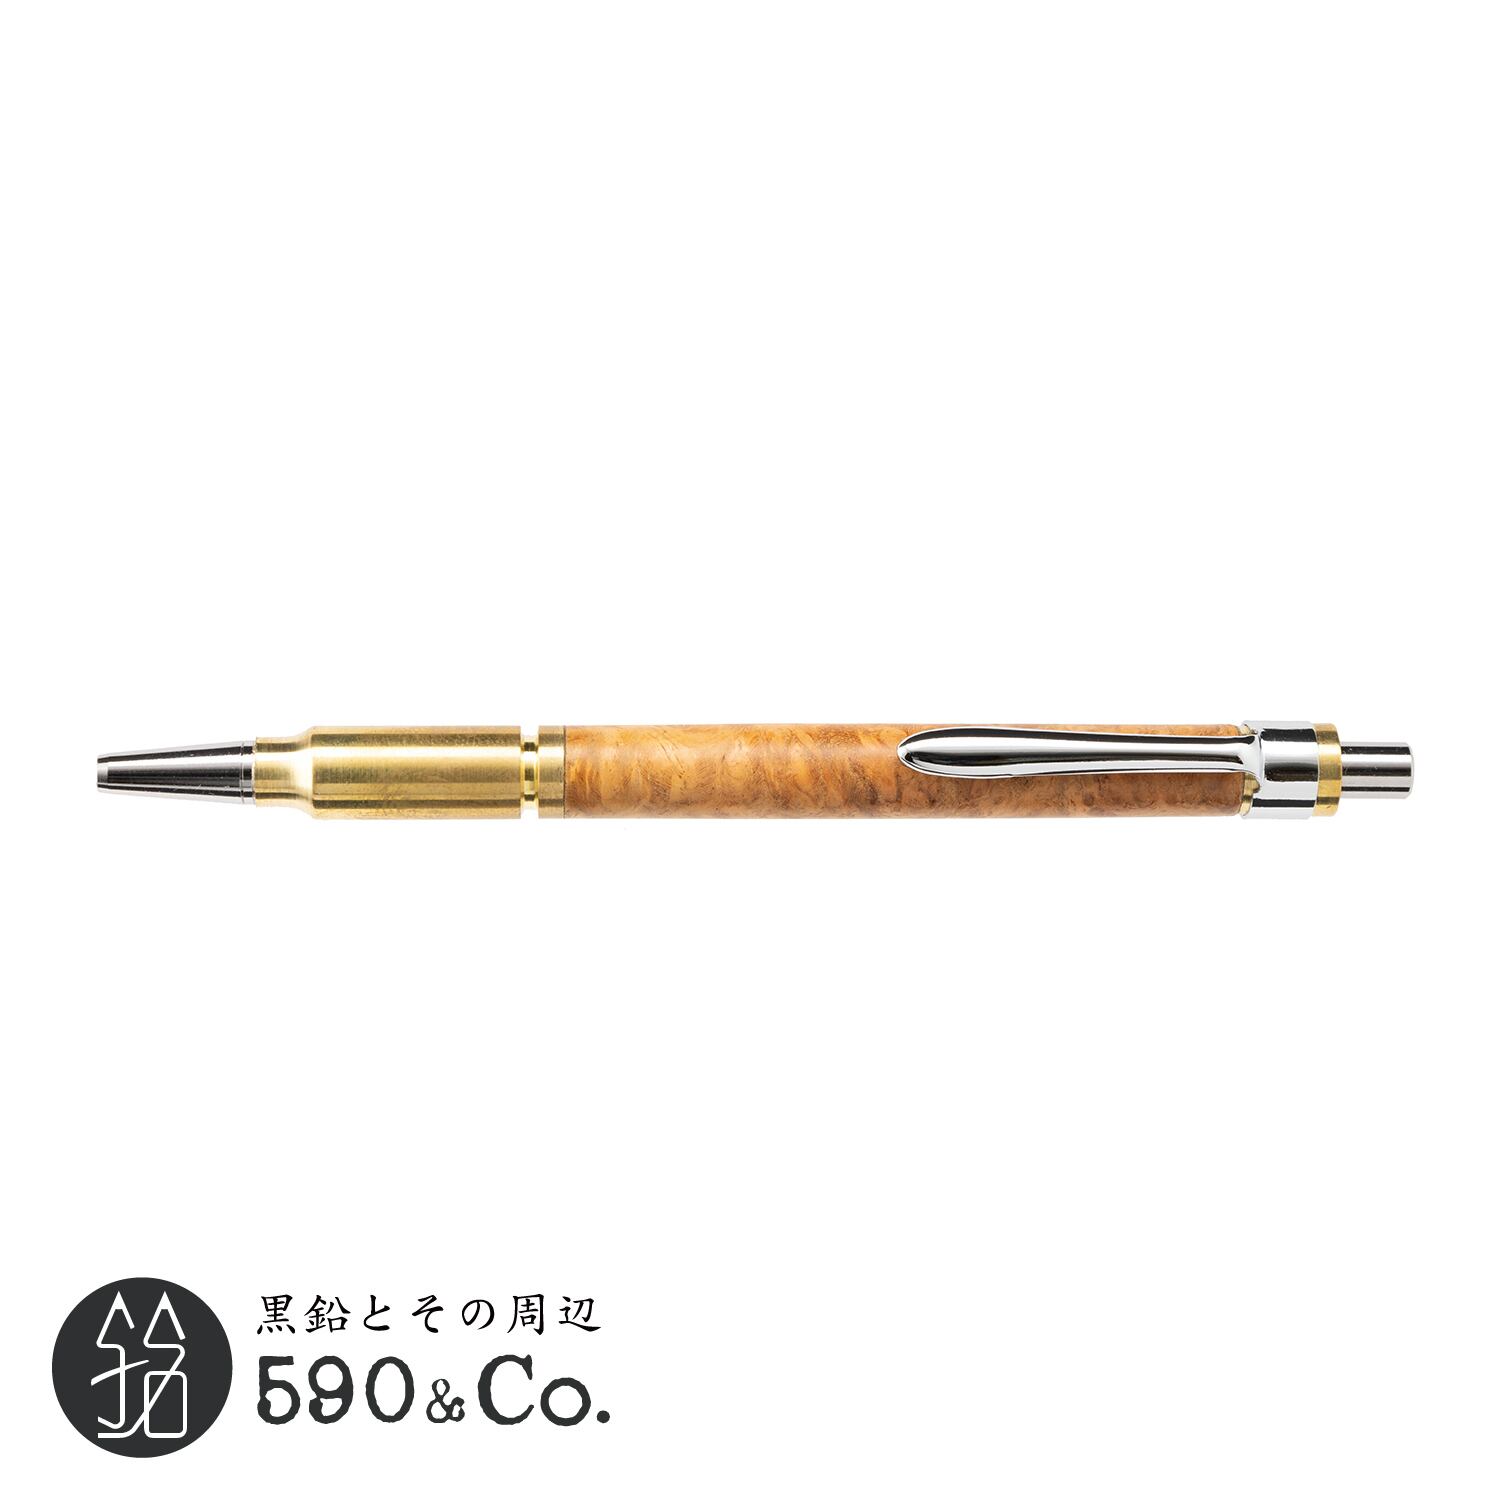 【Flamberg/フランベルク】木製手帳ペンBP (花梨瘤) A | 590&Co.